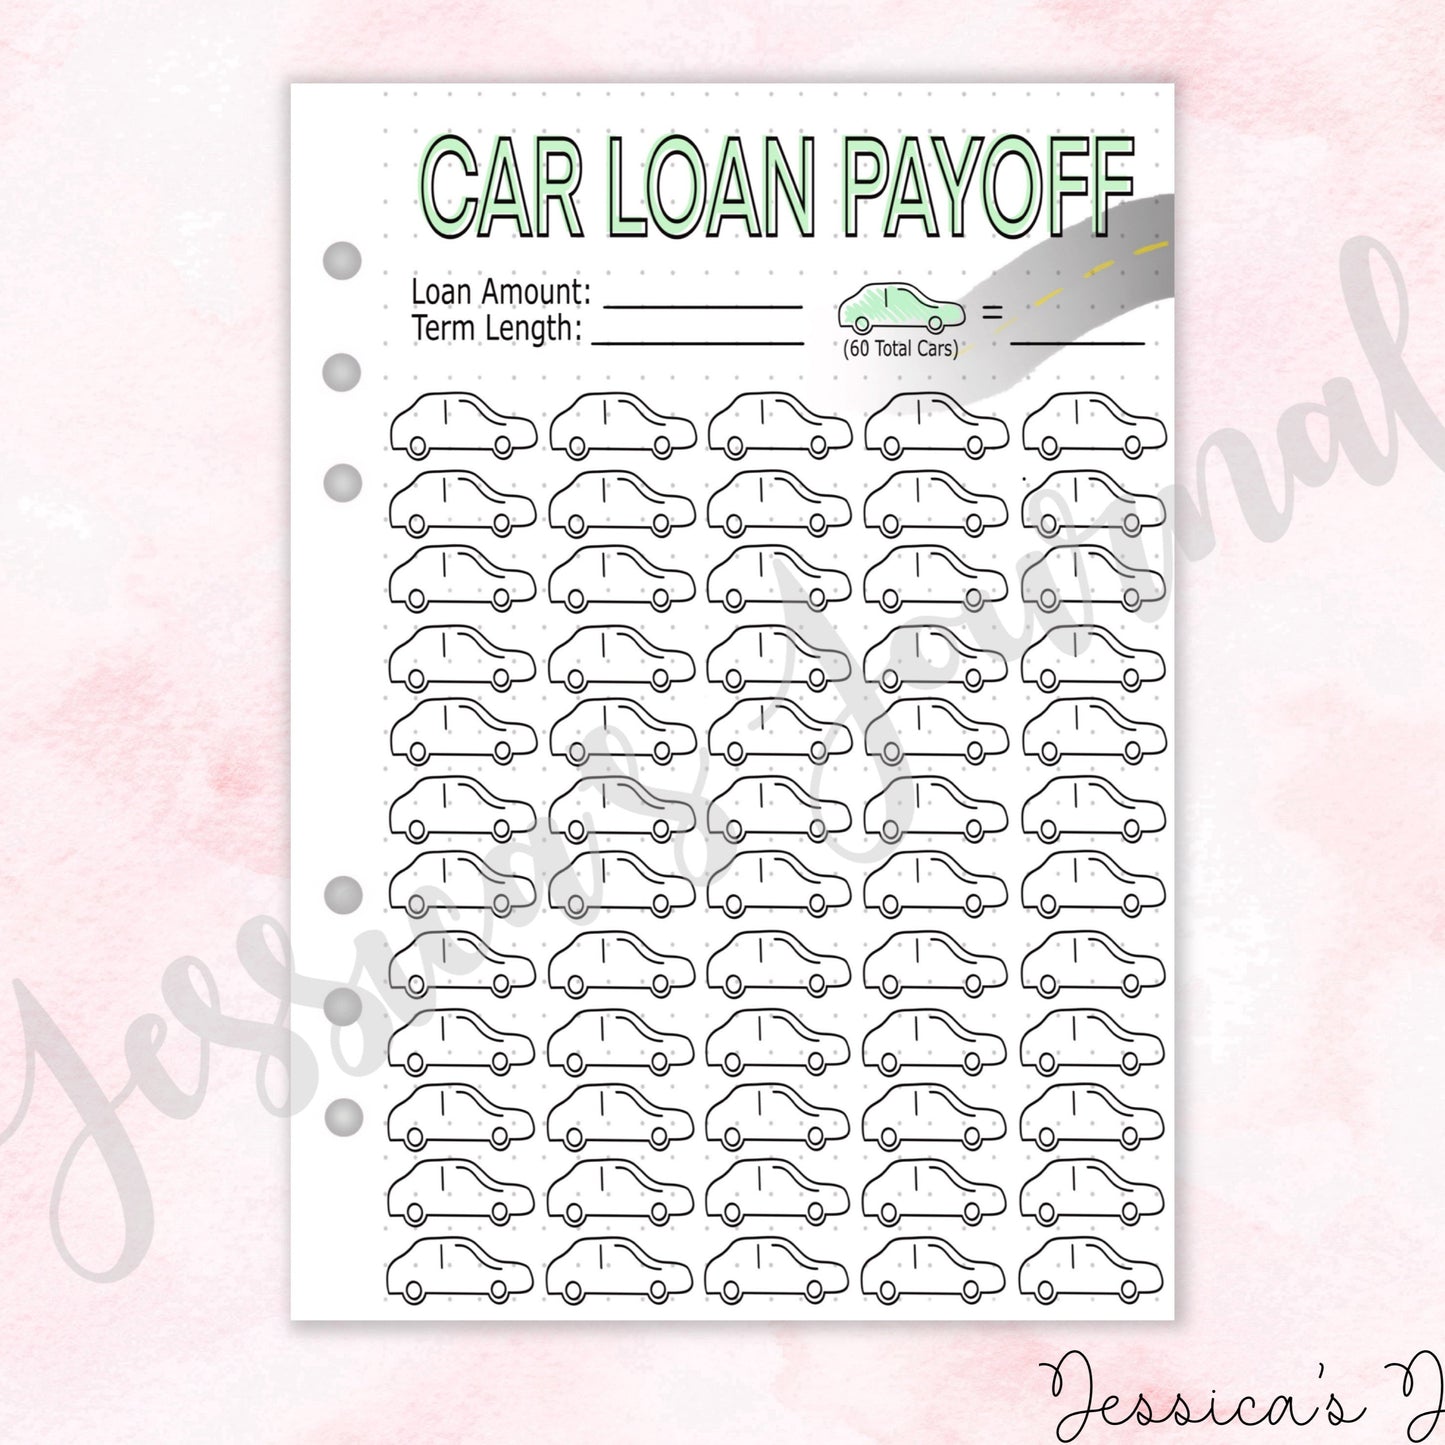 Car Loan Payoff Tracker | Journal Spread